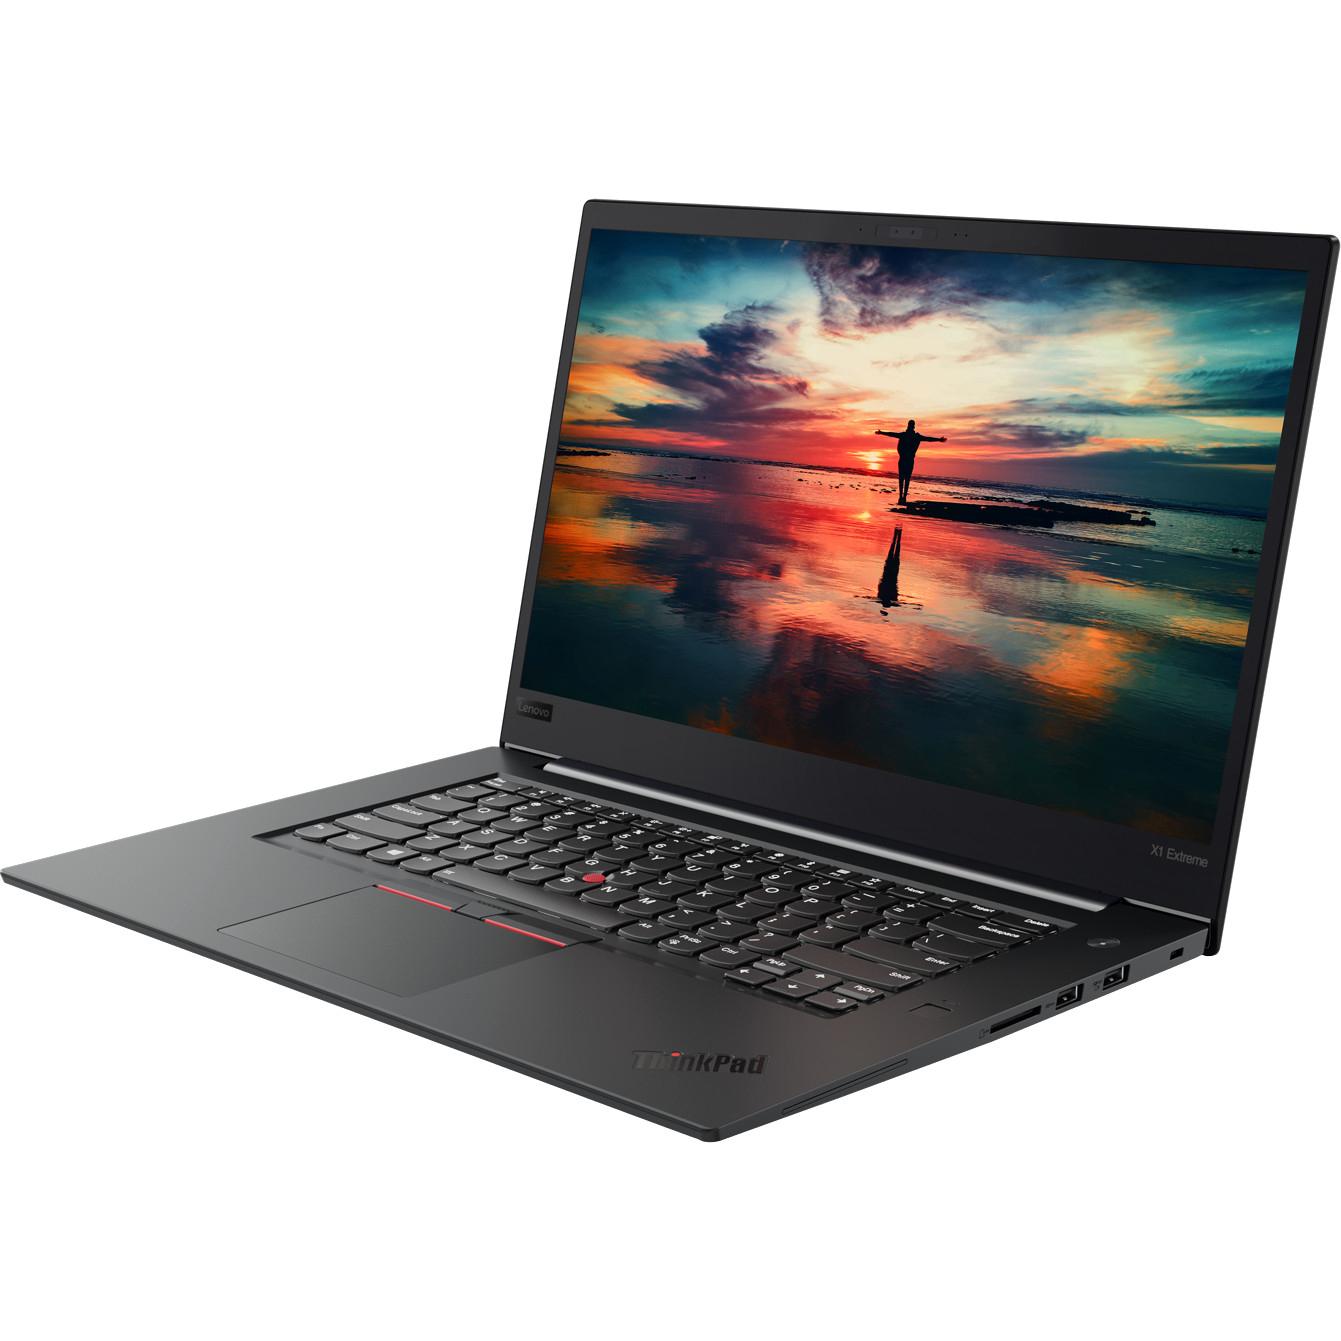 Lenovo ThinkPad X13 AMD Ryzen 3 8GB Notebook Laptop for $626.45 Shipped